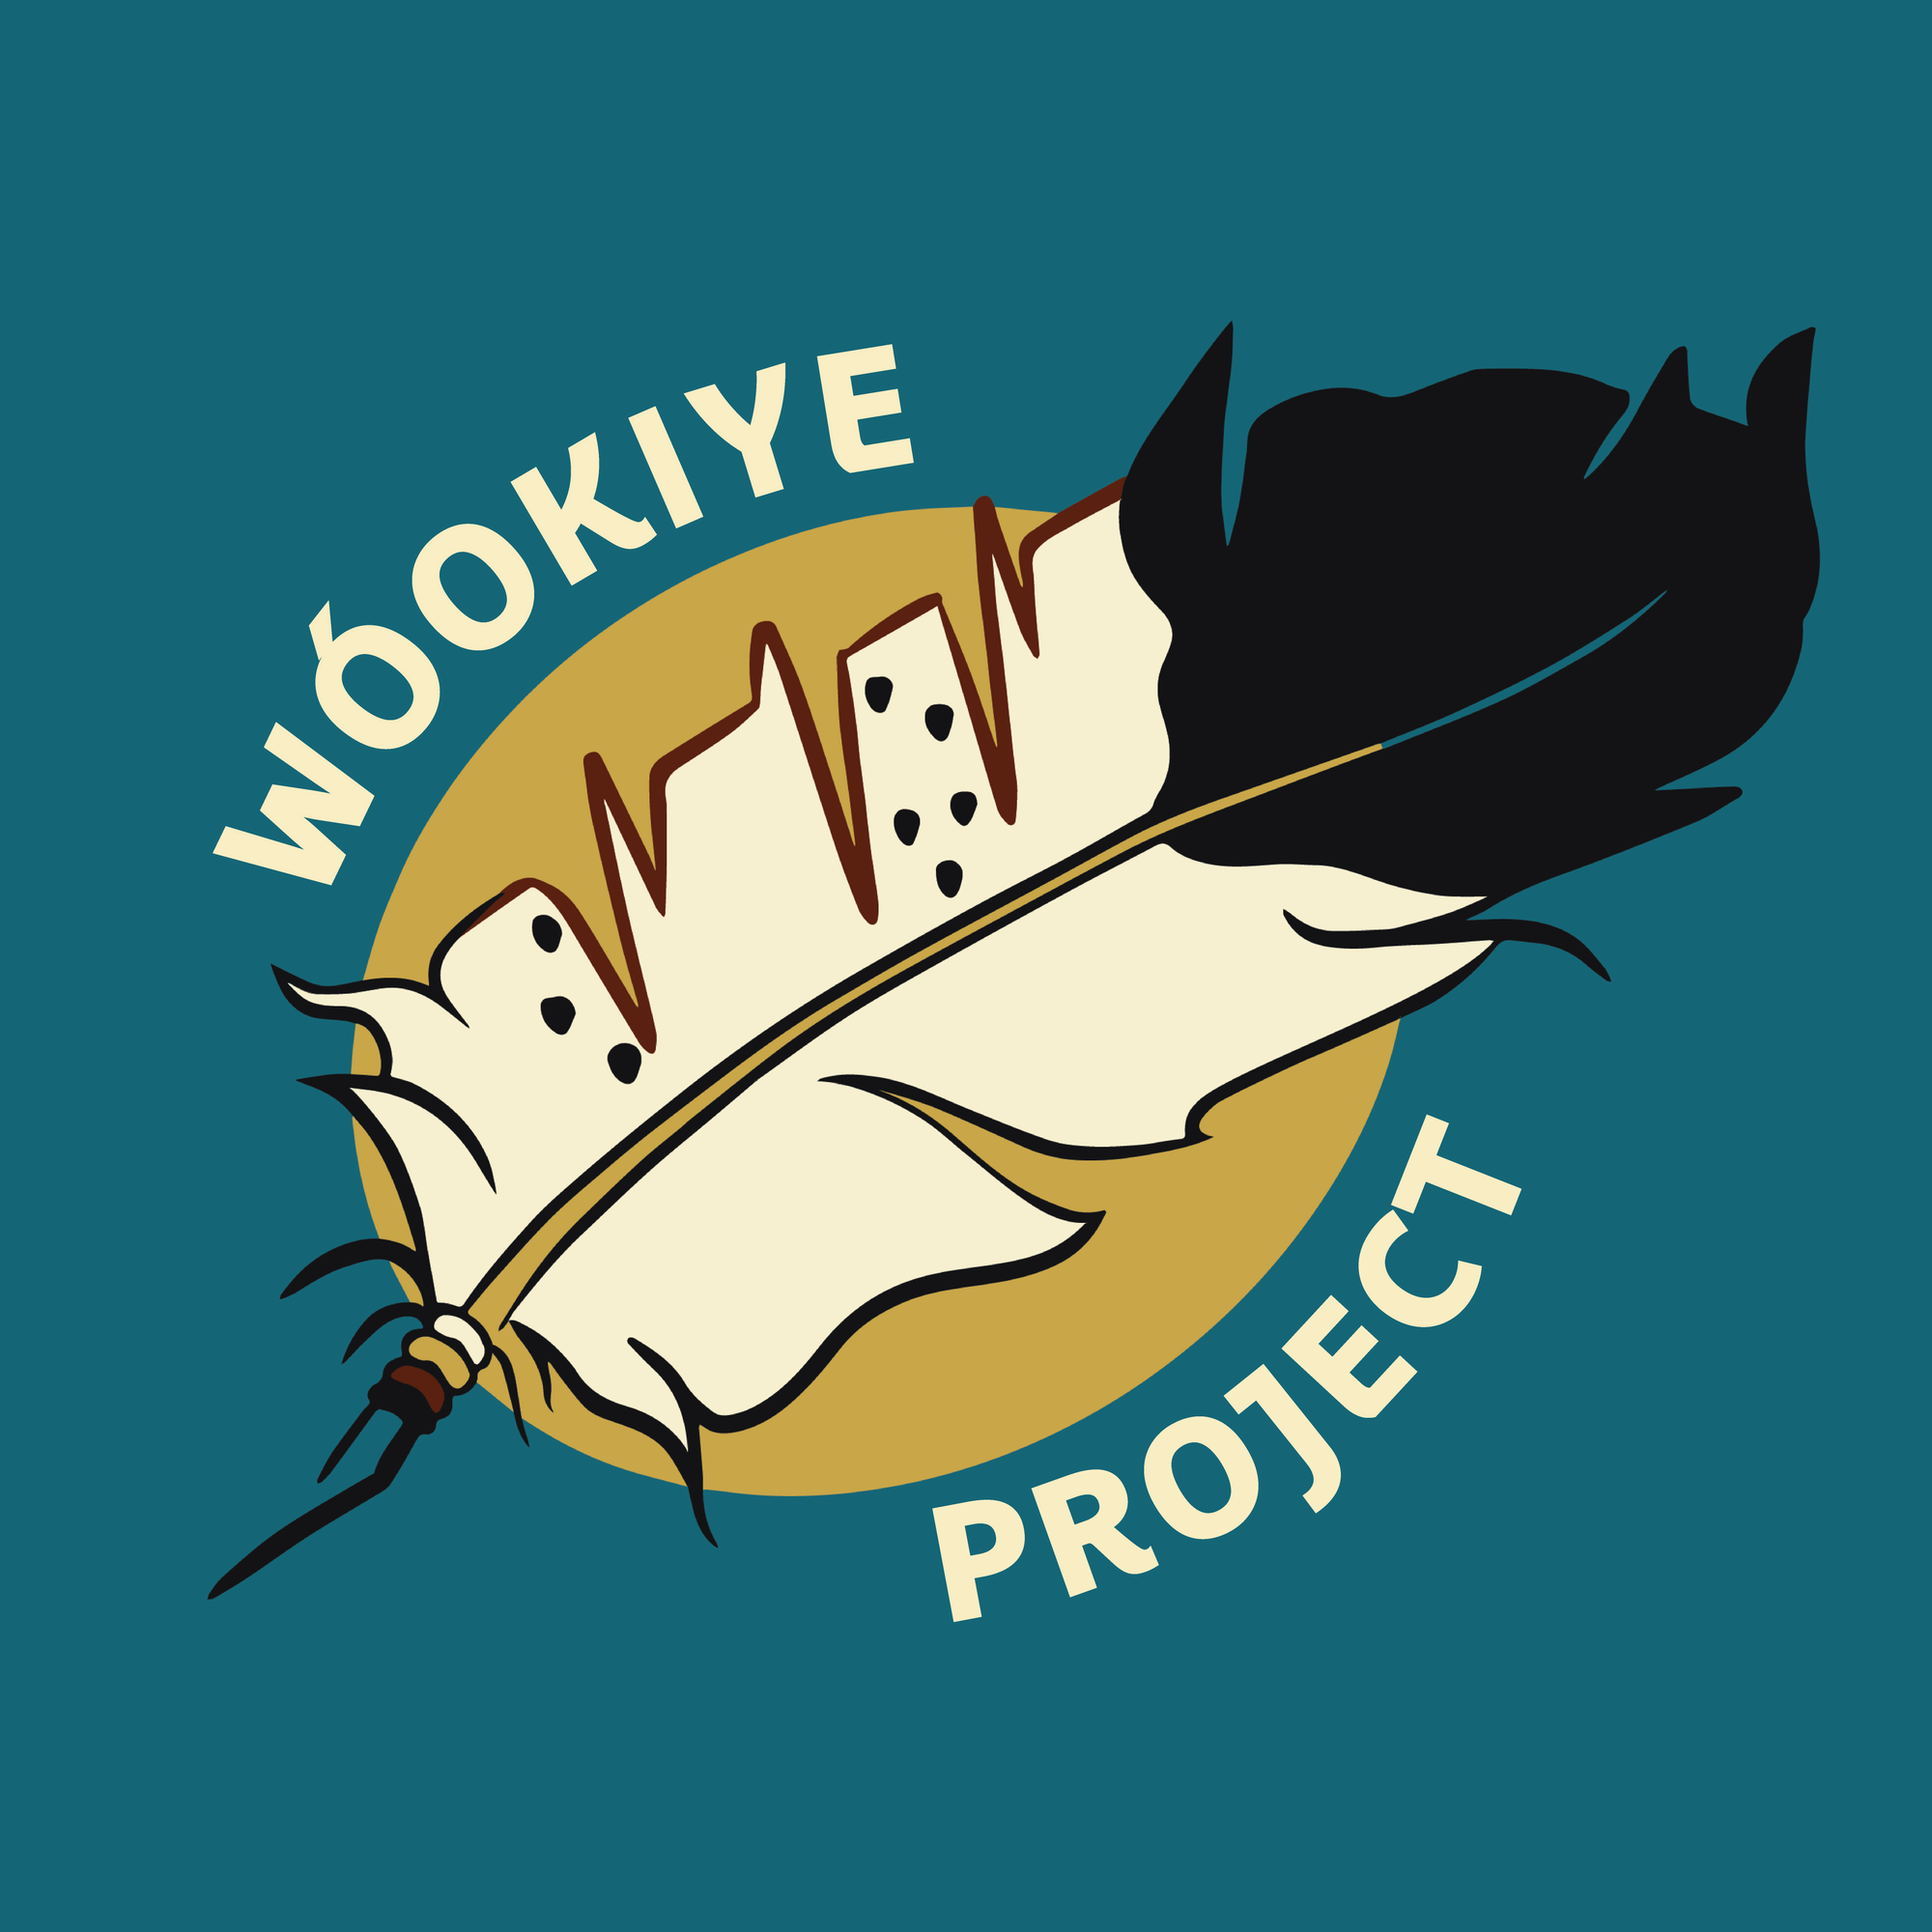 Wookiye Project to help homeless